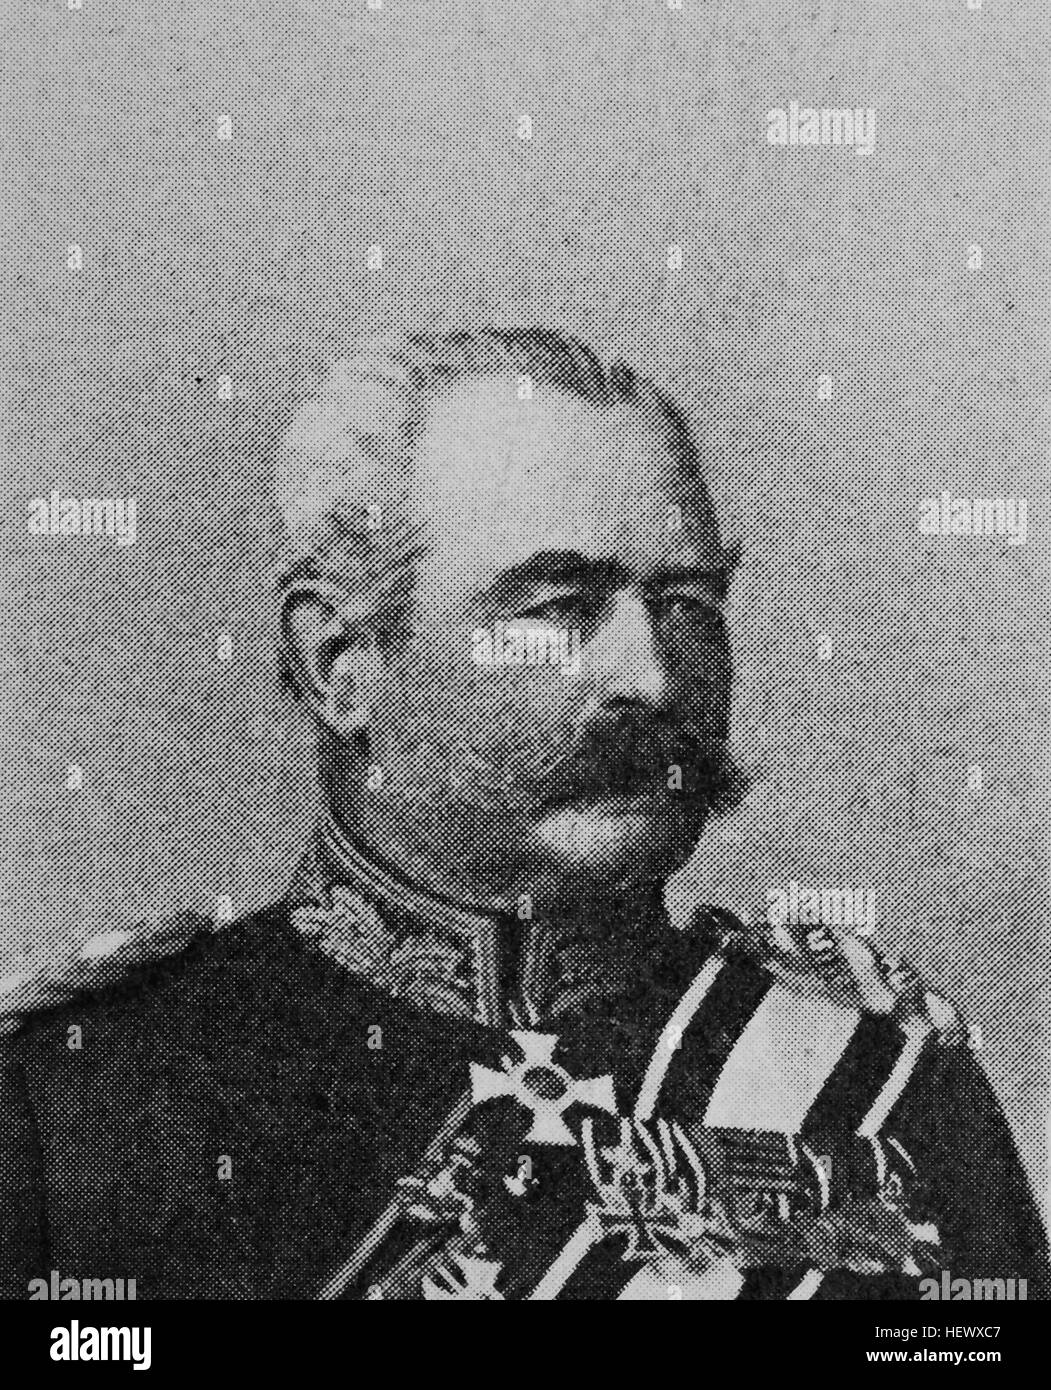 Ernst Alfons Edler von der Planitz, 1857 - 1935, German-American writer, picture from 1895, digital improved Stock Photo